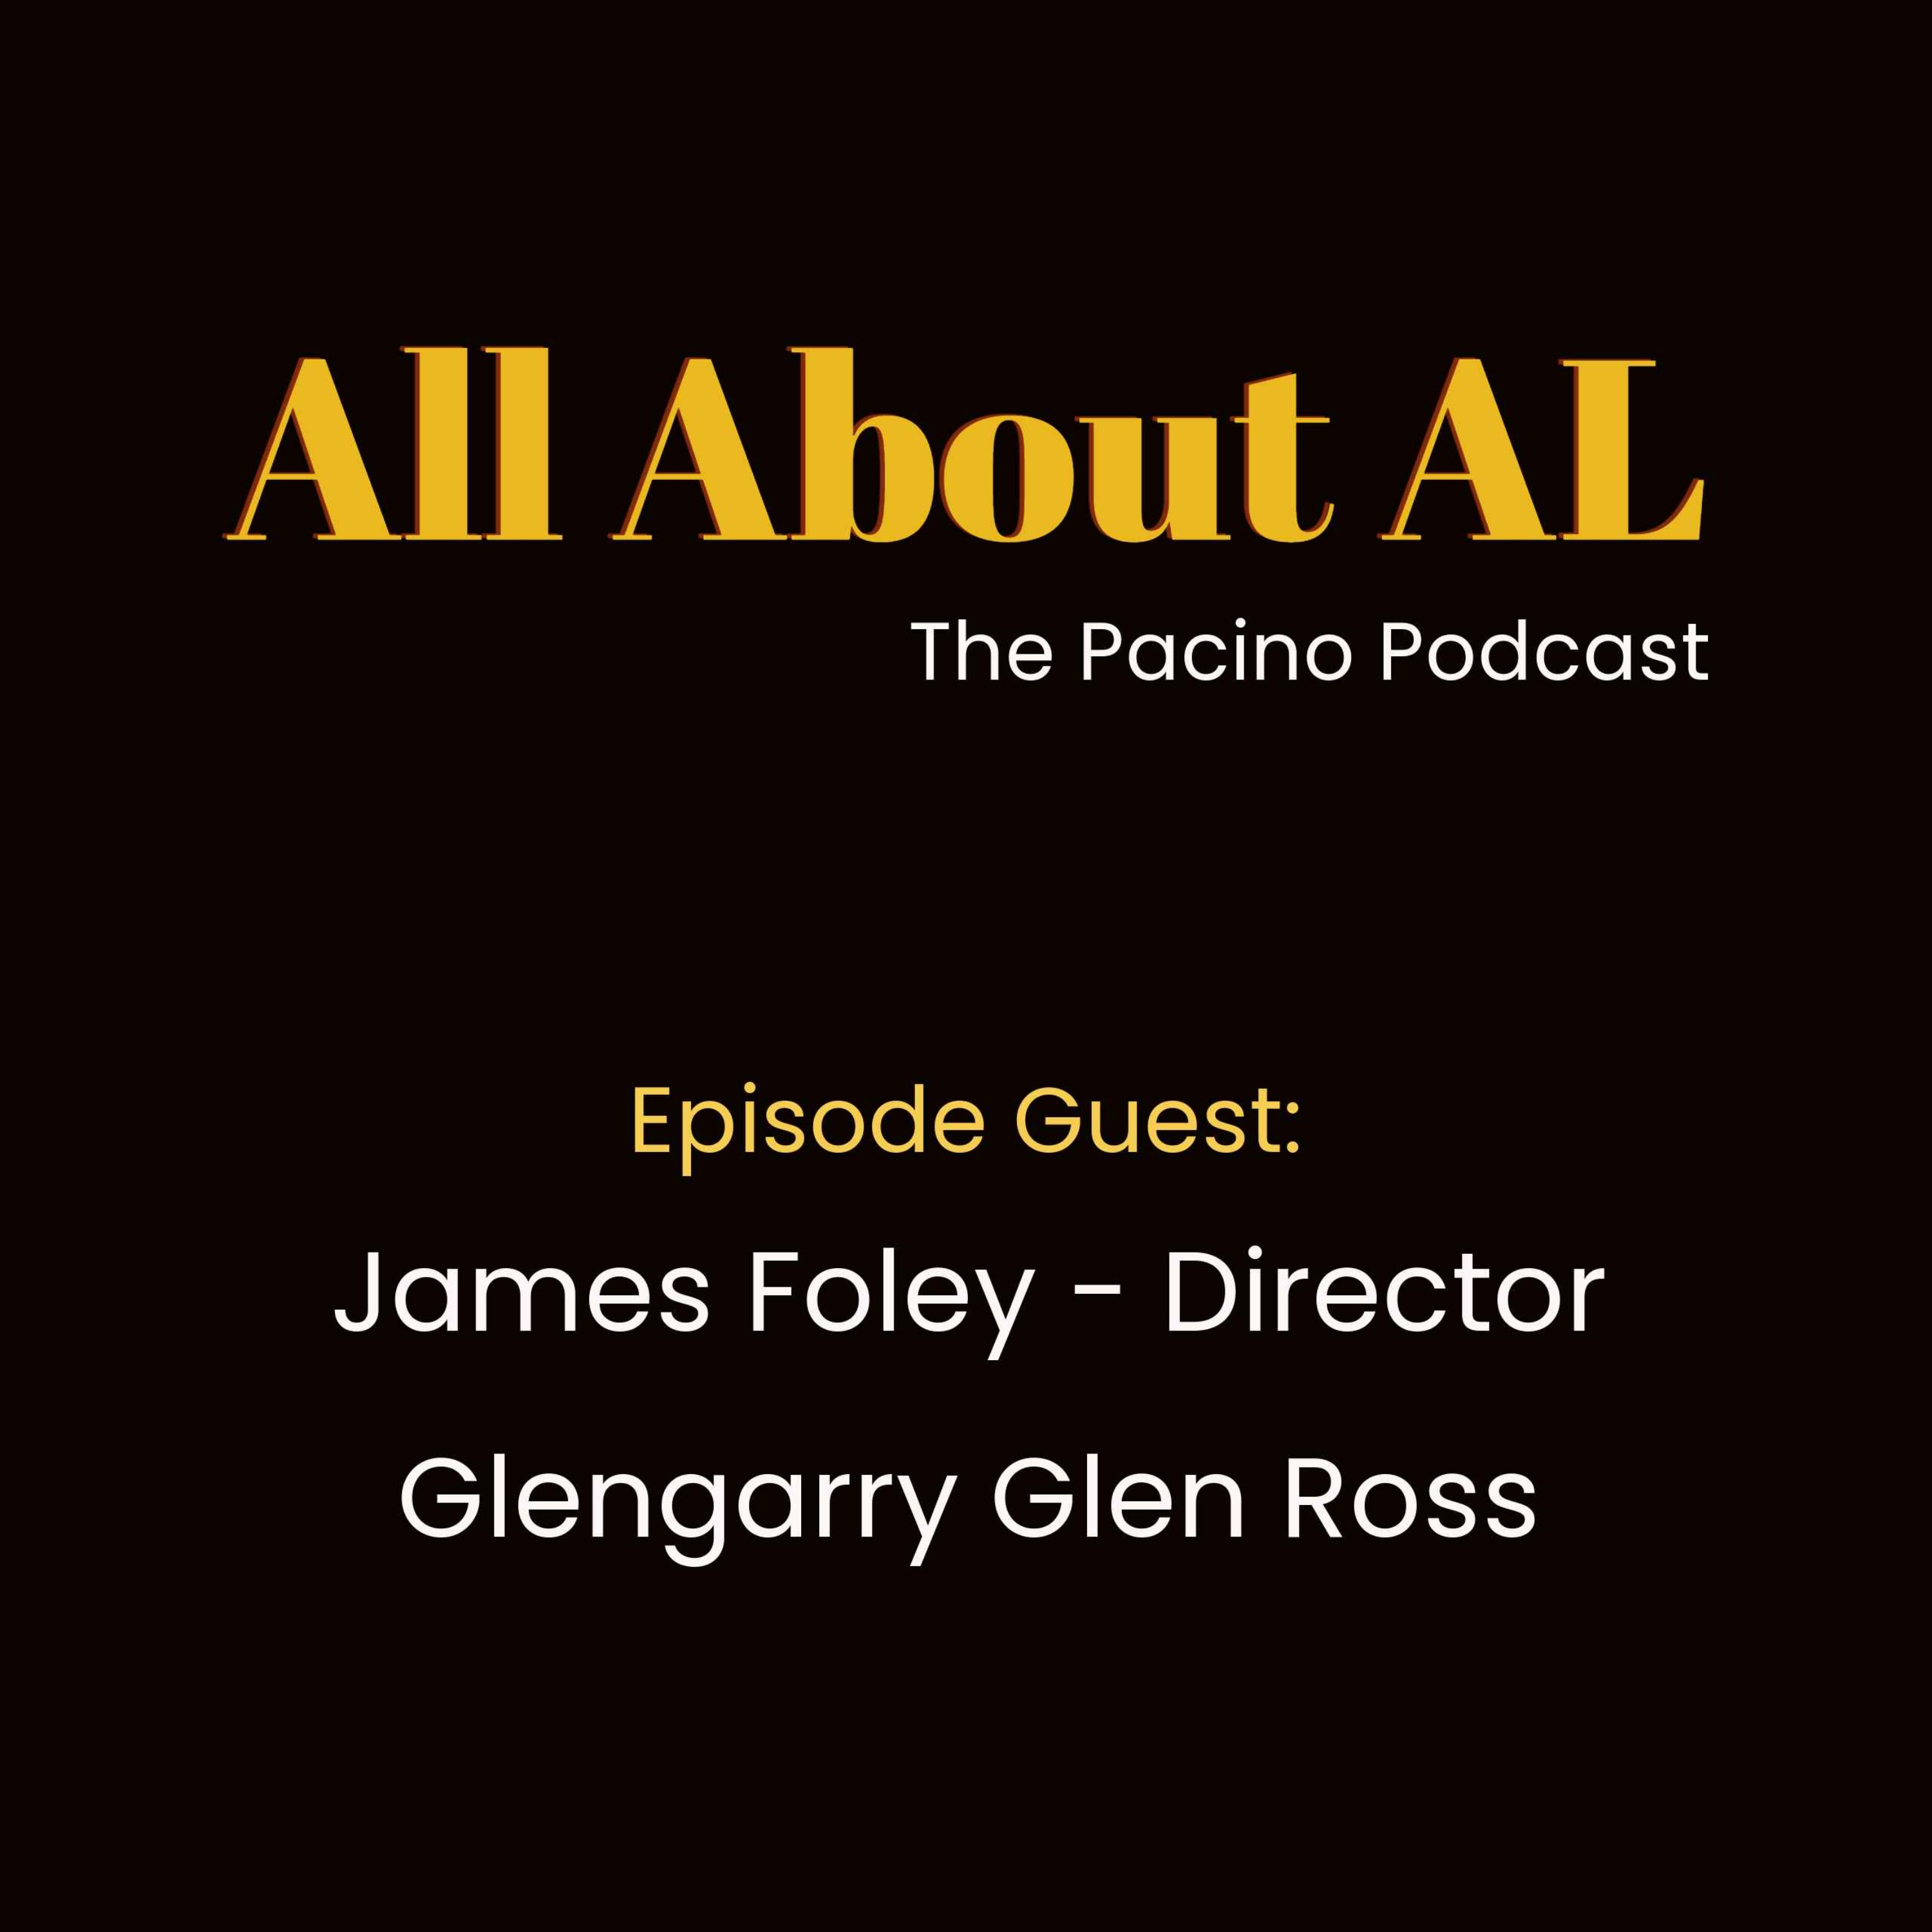 Episode 17: Glengarry Glen Ross with James Foley